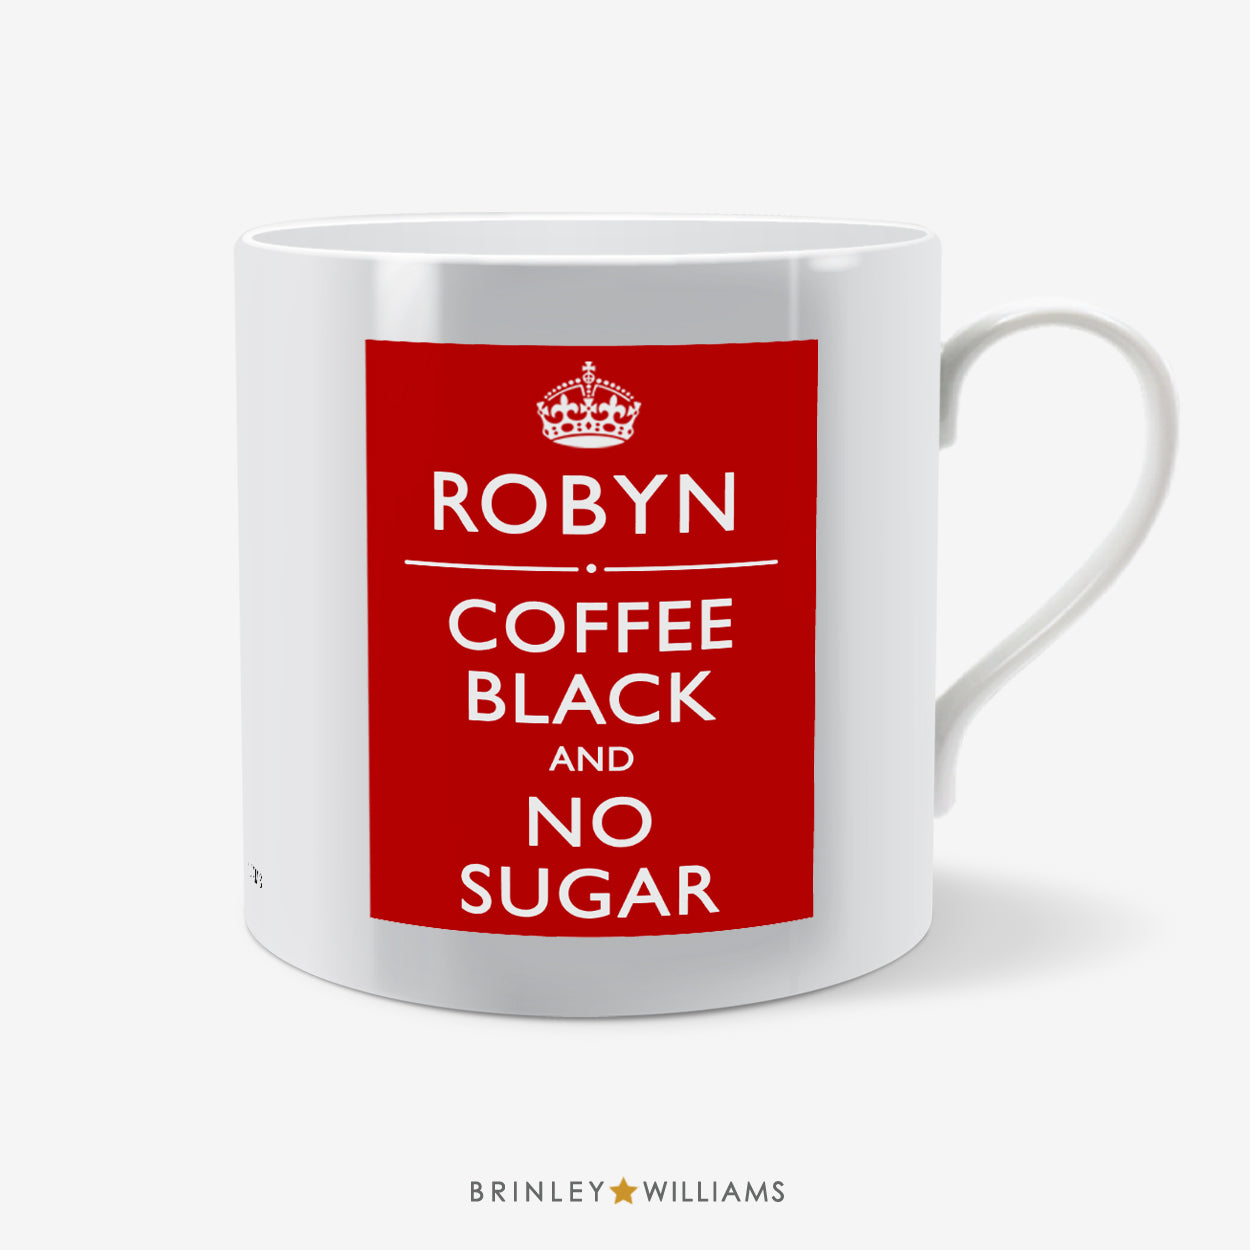 Big and Bold Name Personalised Mug  - Red